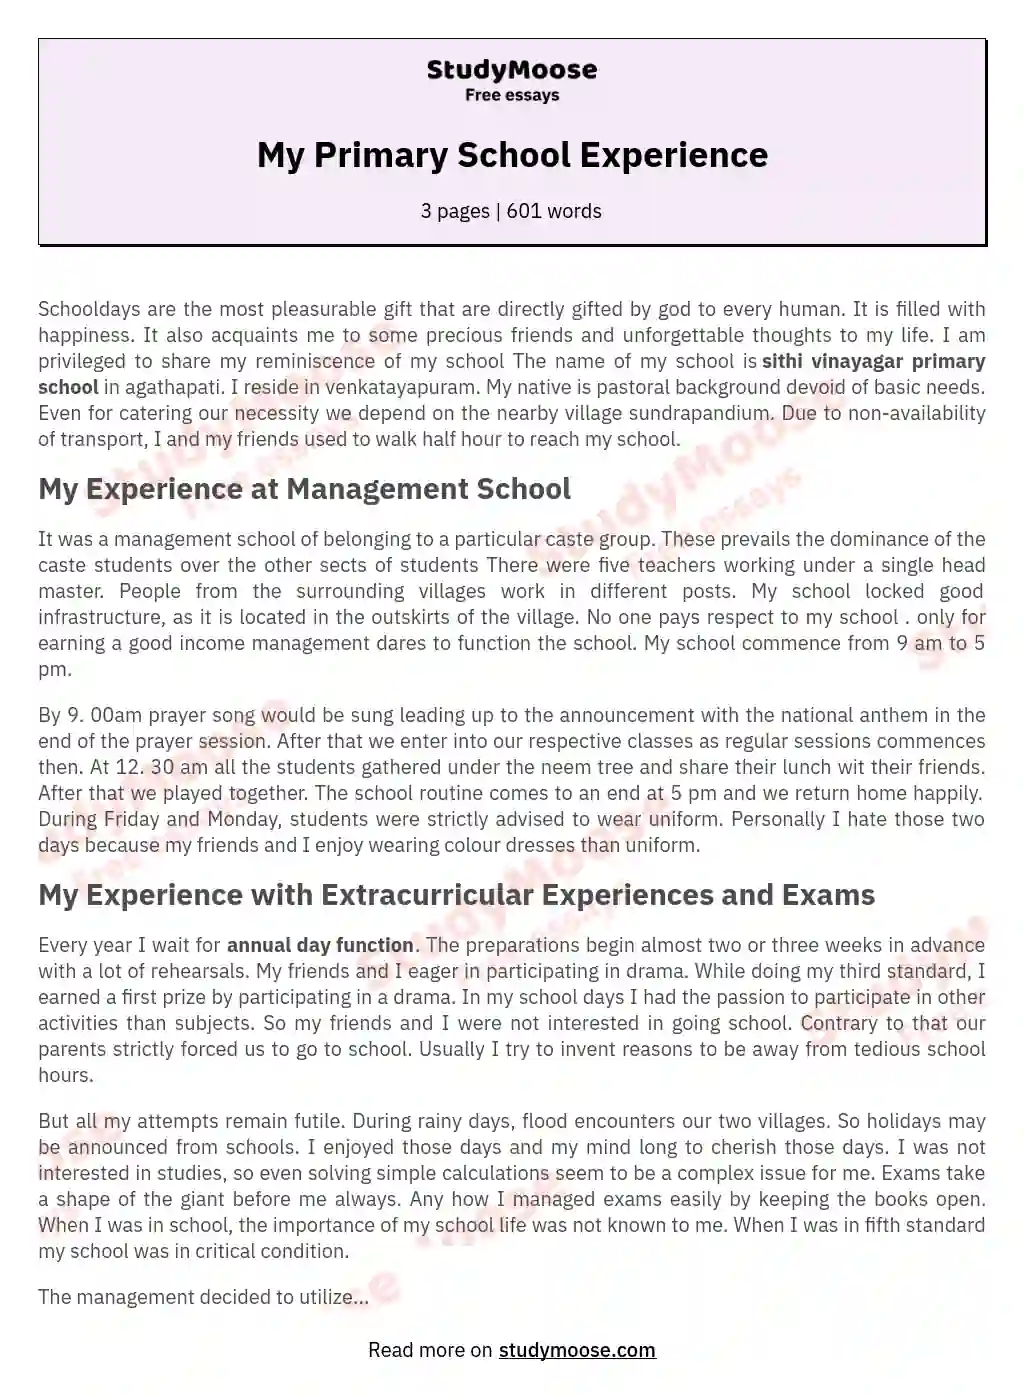 essay on elementary school experience